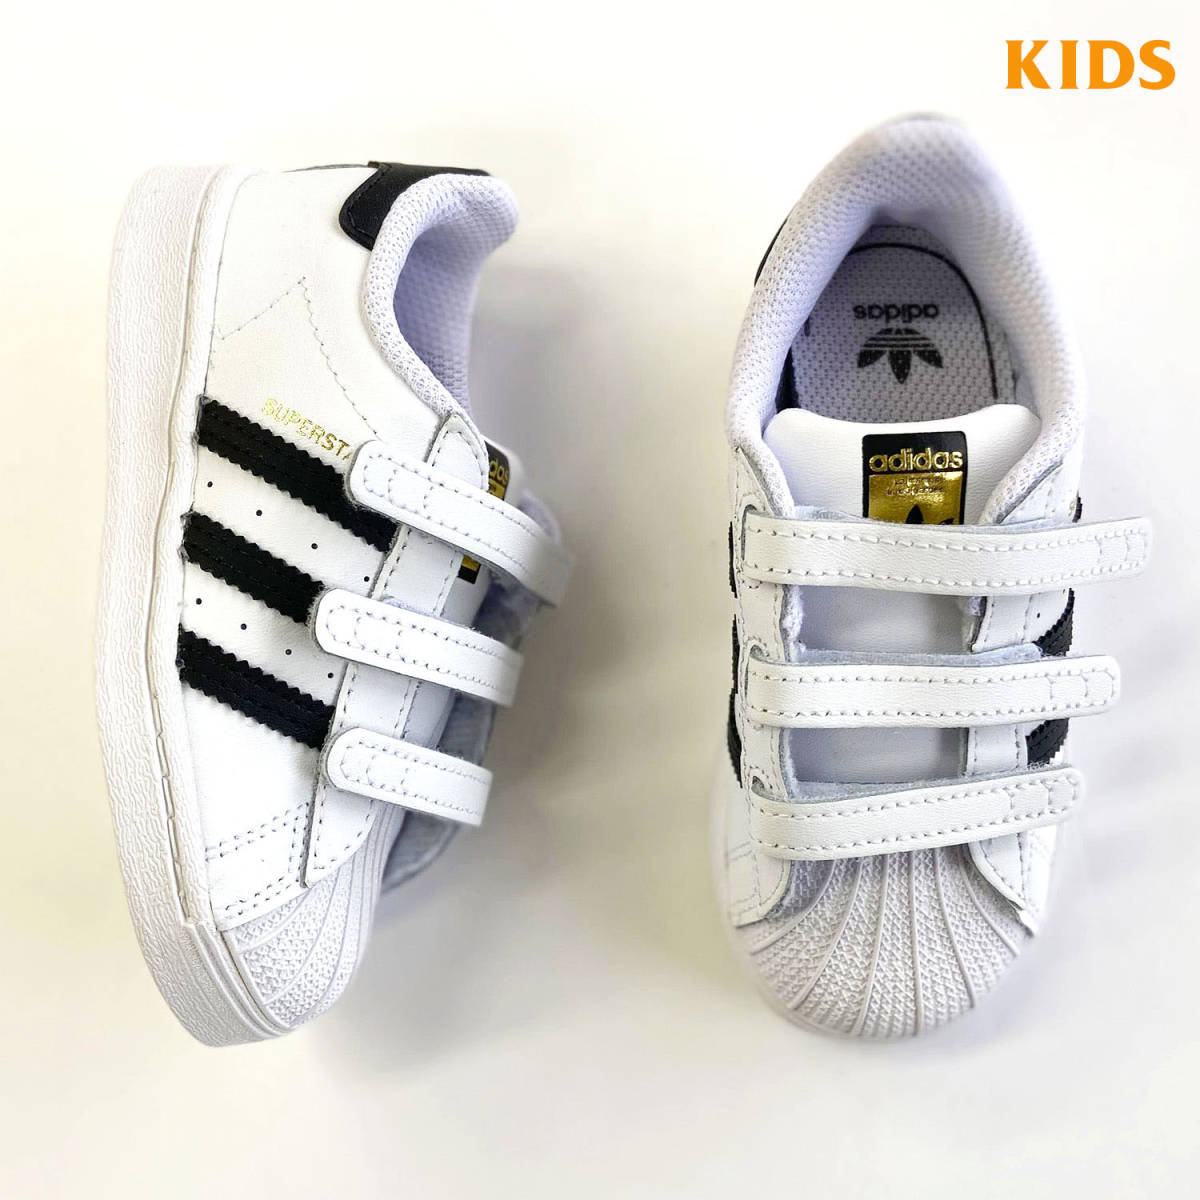 Adidas Kids 14 5センチ Superstar Toddler アディダス キッズ スーパースター トドラー 日本未発売 スーパーsale セール期間限定 アディダス